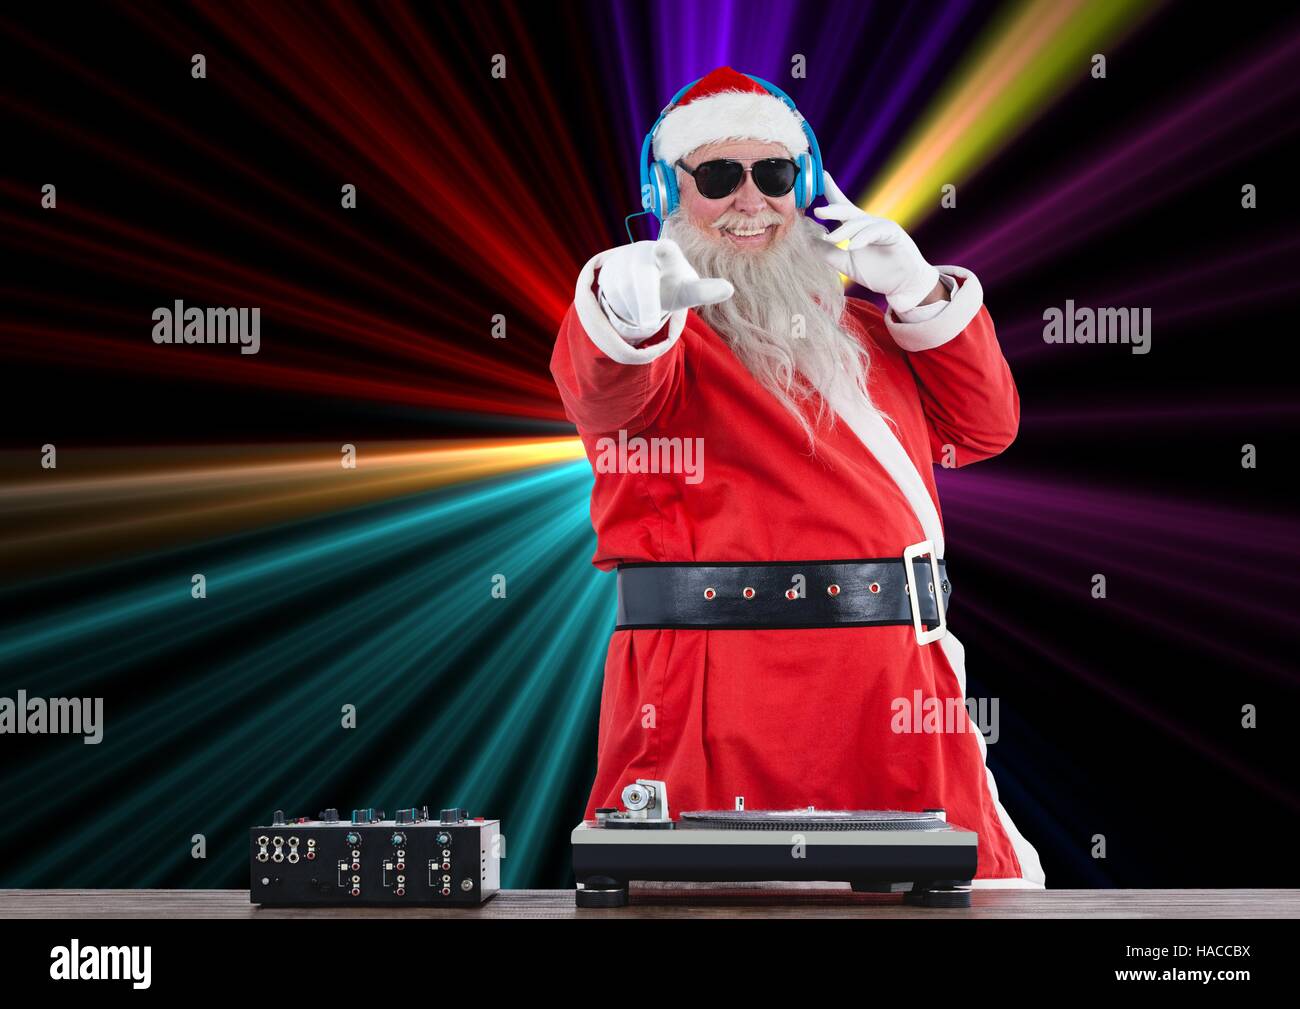 Dj santa claus mixing up some Christmas cheer Stock Photo